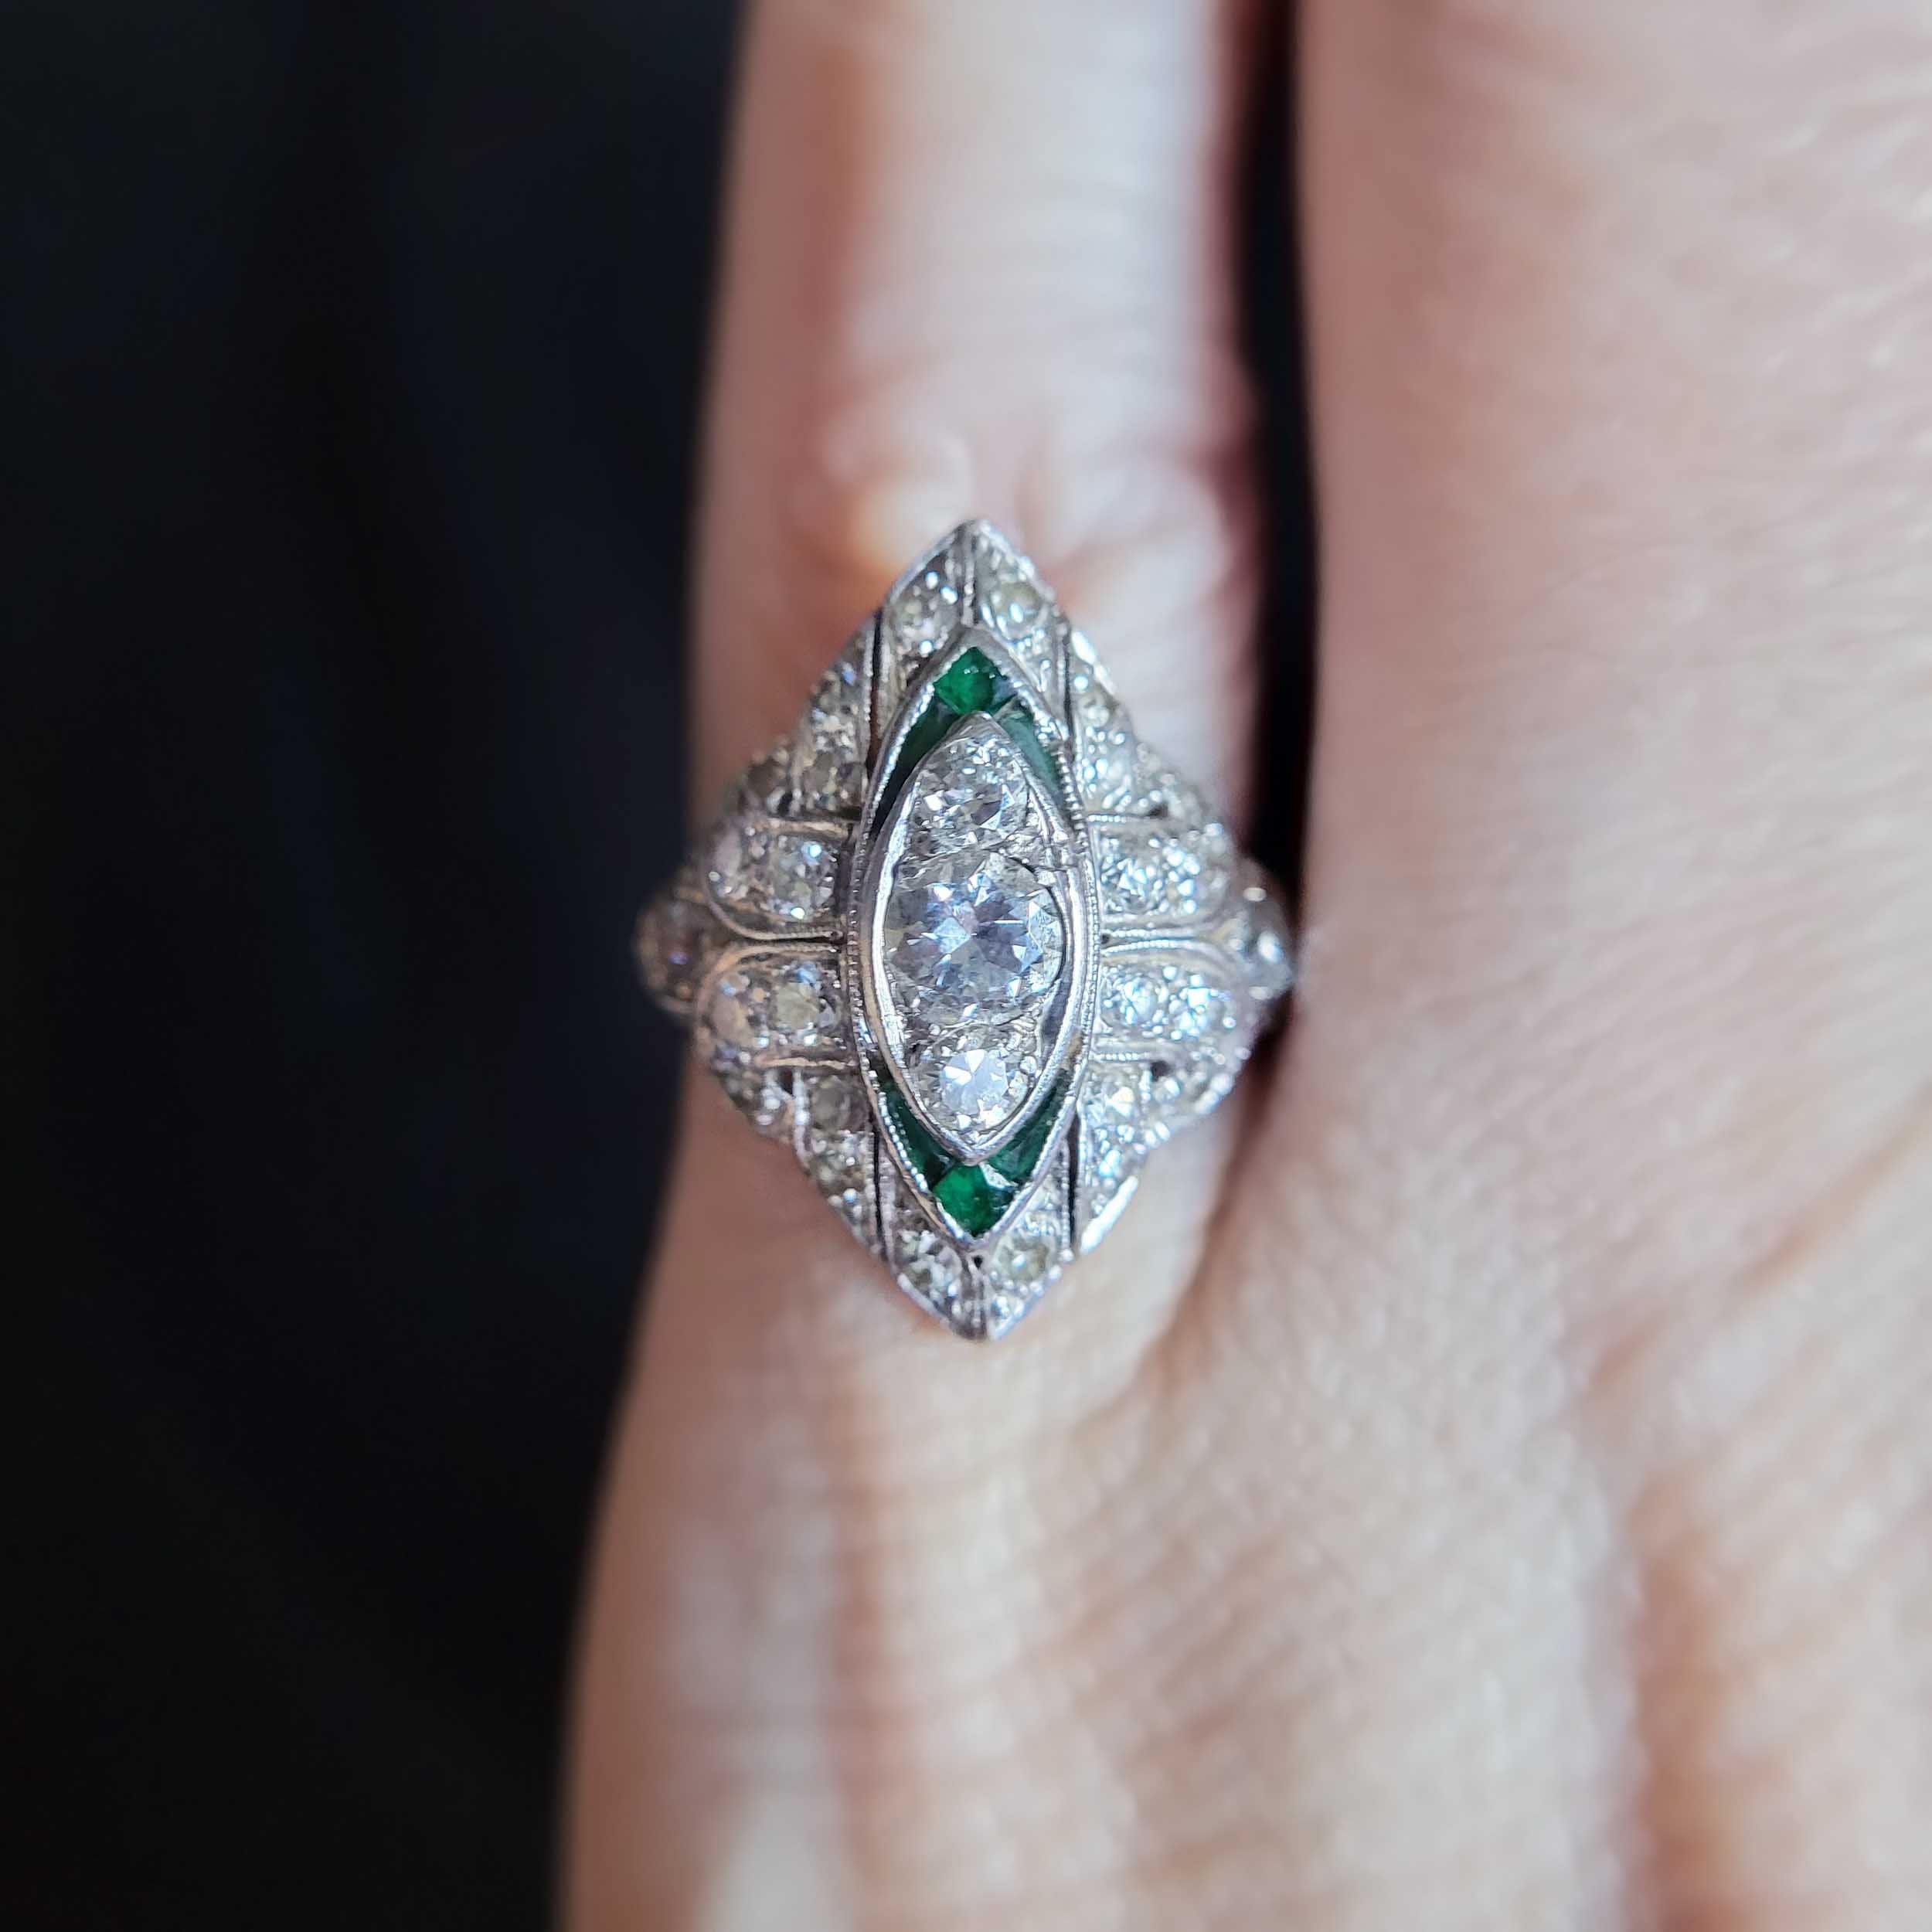 Handboek Mentaliteit Prestatie Vintage 1930s Art Deco Diamond Engagement Ring Vintage - Etsy